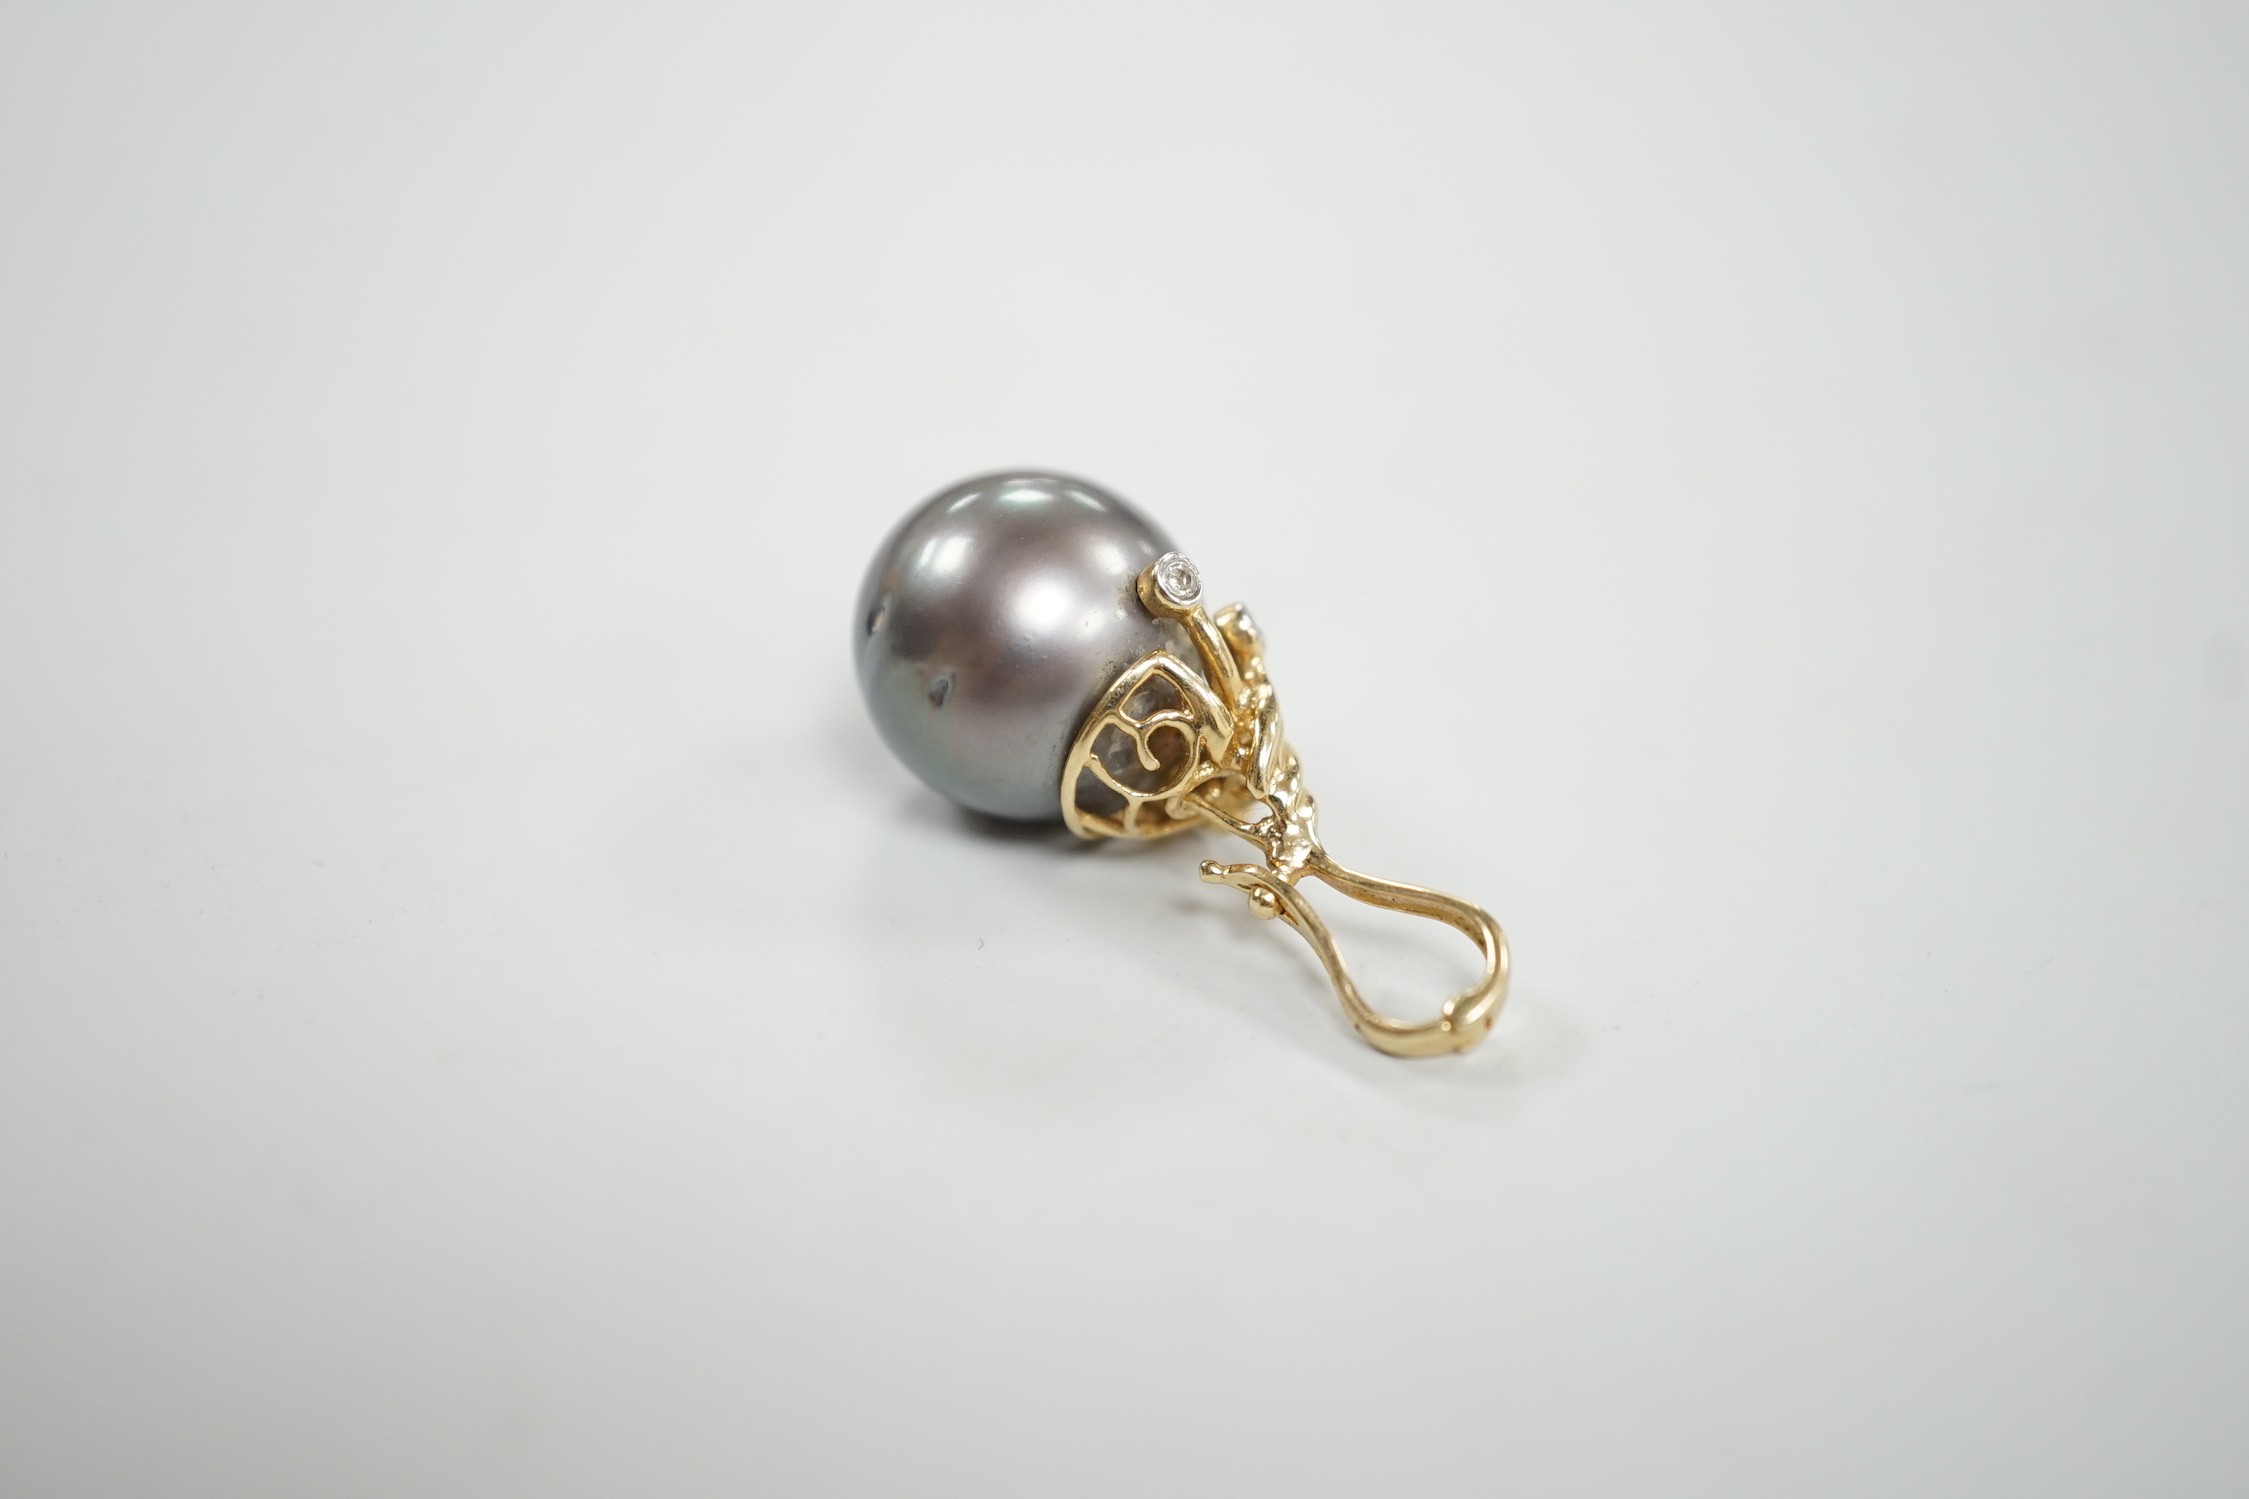 A modern 585 yellow metal, single stone Tahitian pearl and five stone diamond chip set pendant, pearl diameter 13.6mm, 30mm, gross weight 5.4 grams.